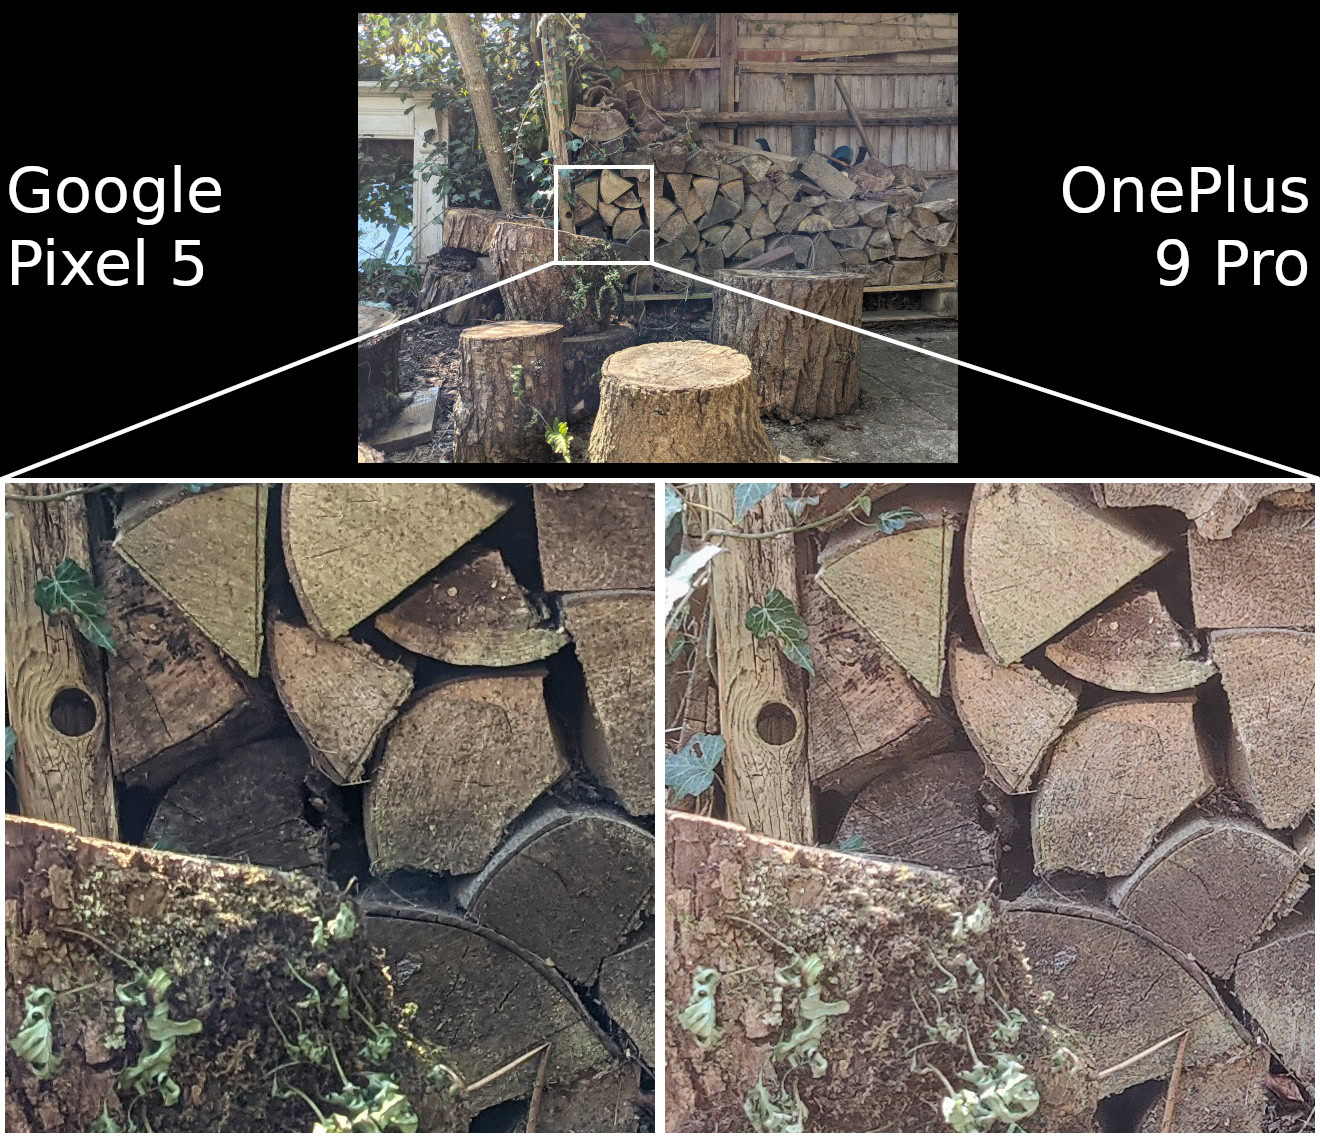 Google Pixel 5 vs OnePlus 9 Pro detail